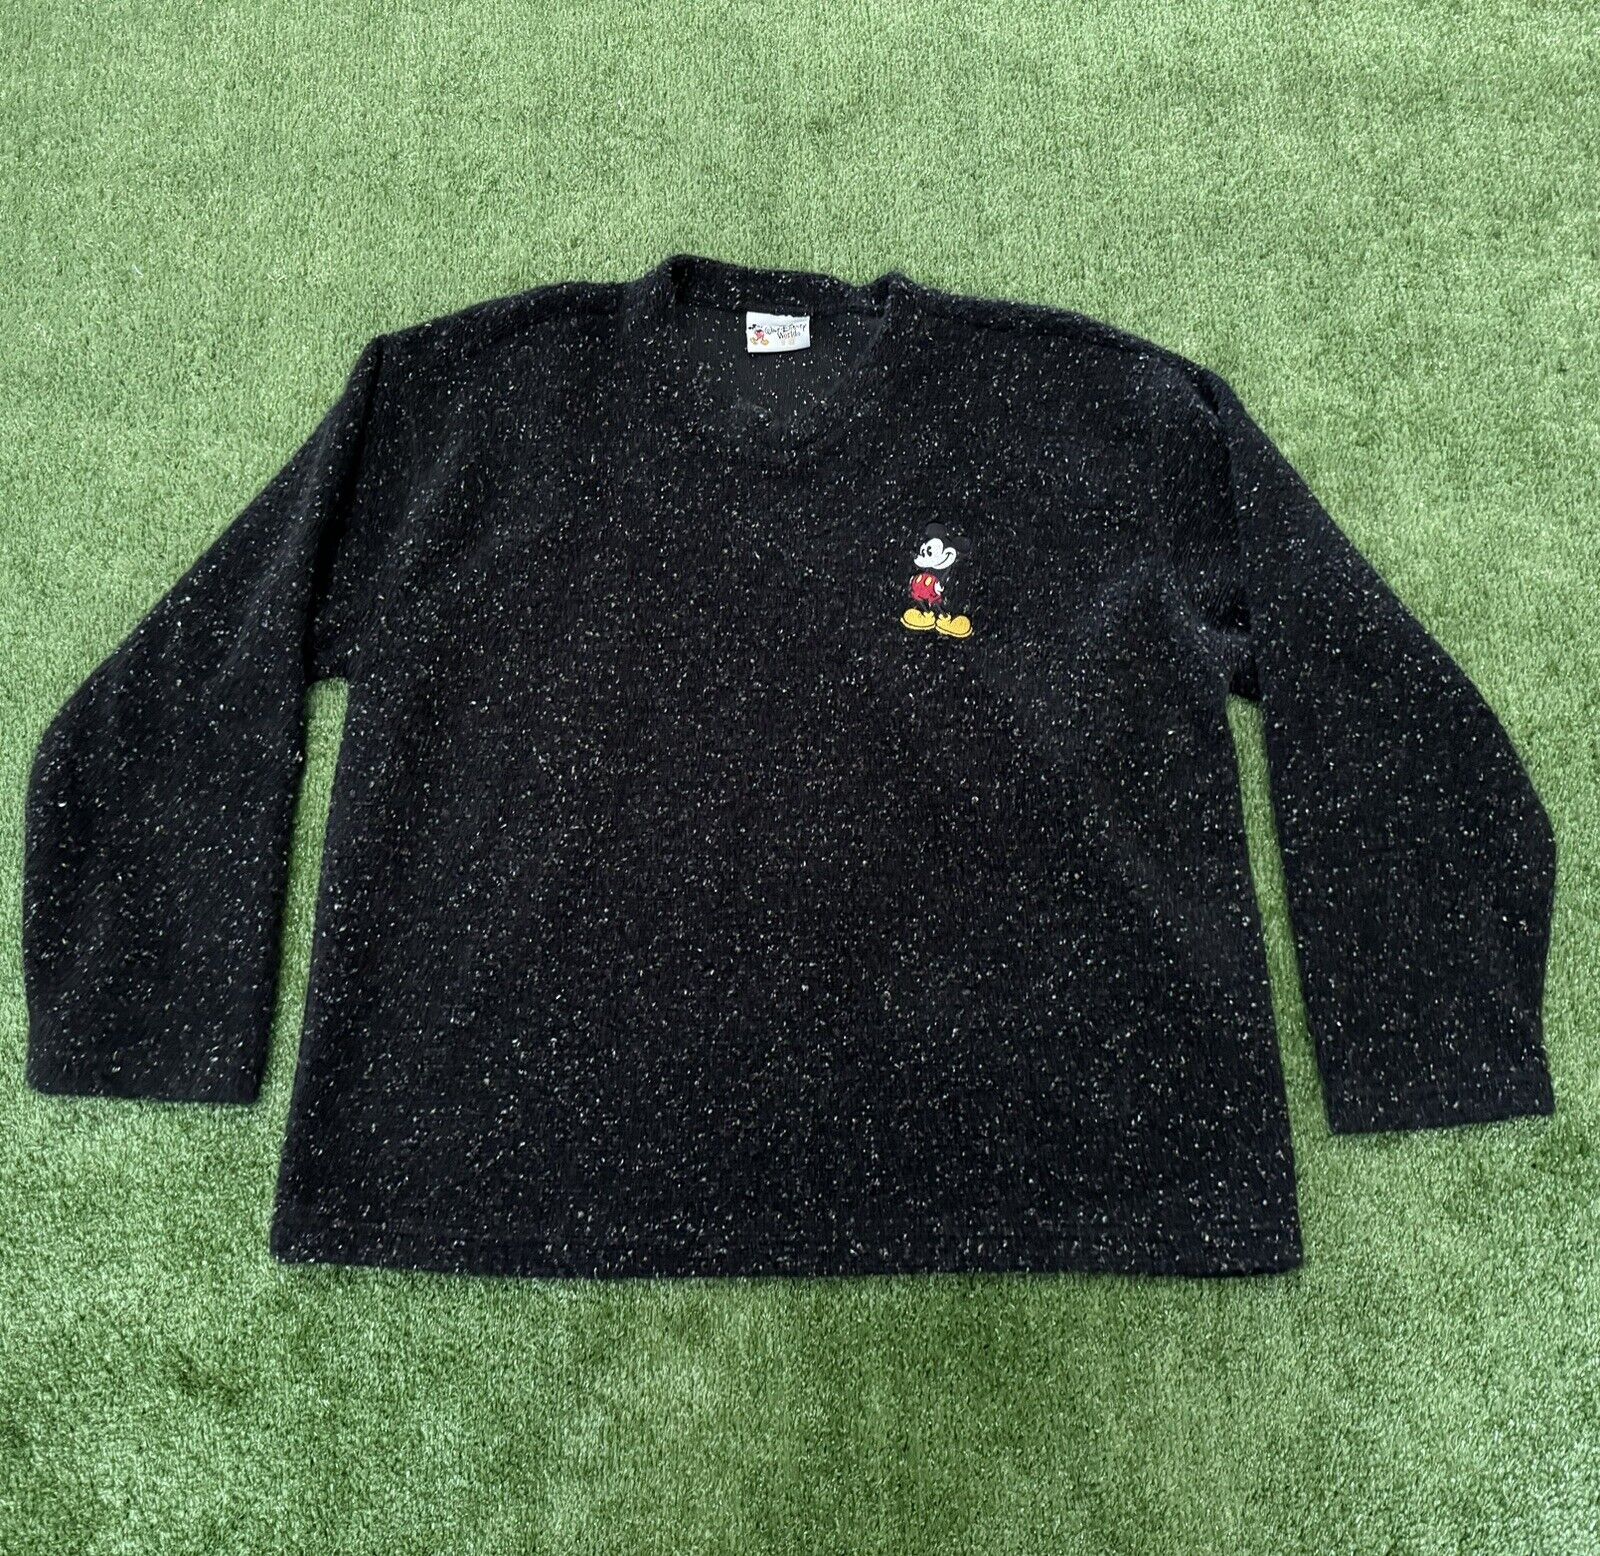 Vtg Walt Disney World Mickey Mouse Pullover Sweater Top Sz L Black Speckled USA